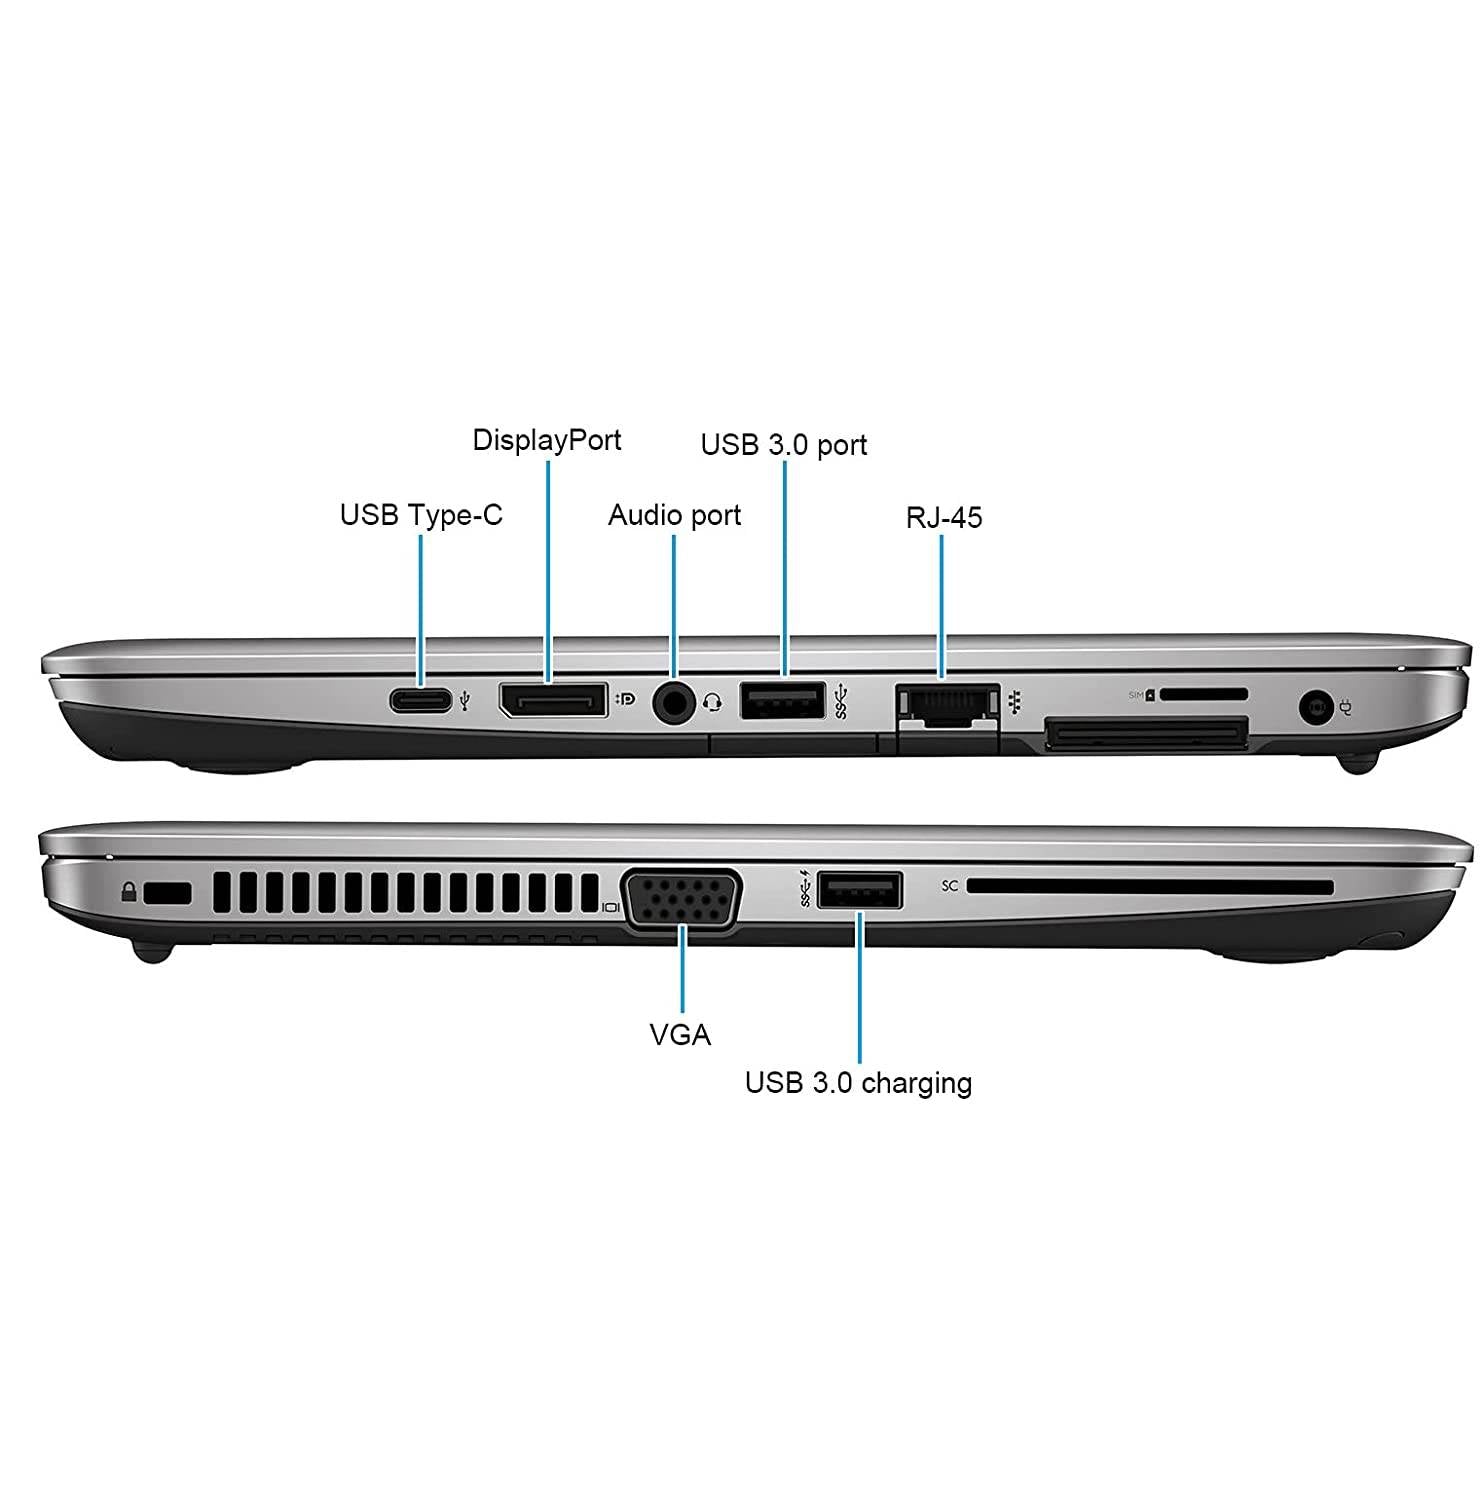 Ordinateur portable professionnel HP Elitebook 820 G3 remis à neuf, 12,5"HD (Intel Core i5-6300U 2,4 Ghz/8 Go de RAM/256 Go SSD/802.11 AC/Windows 10)